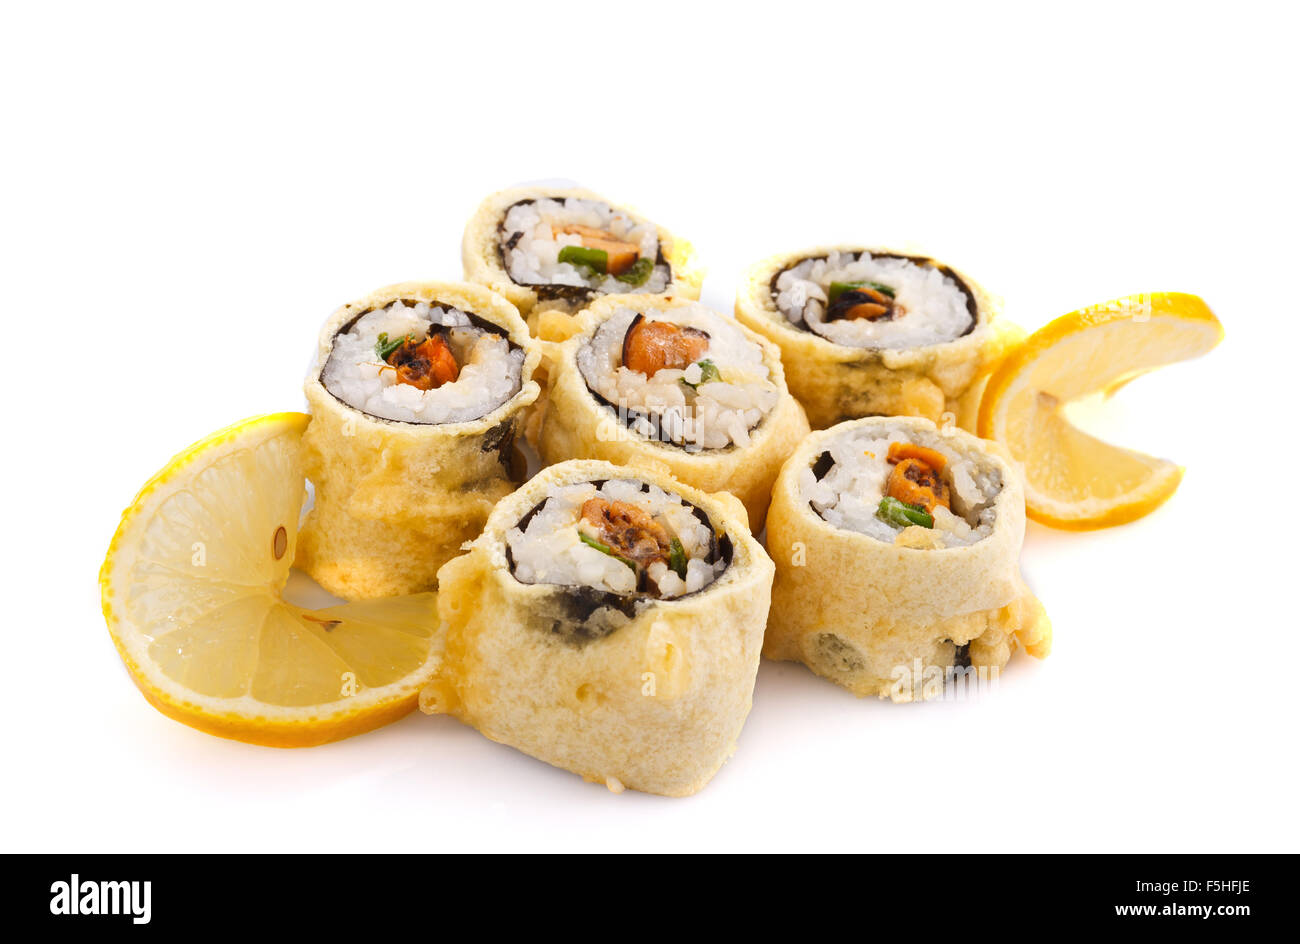 sushi roll fried in tempura batter Stock Photo